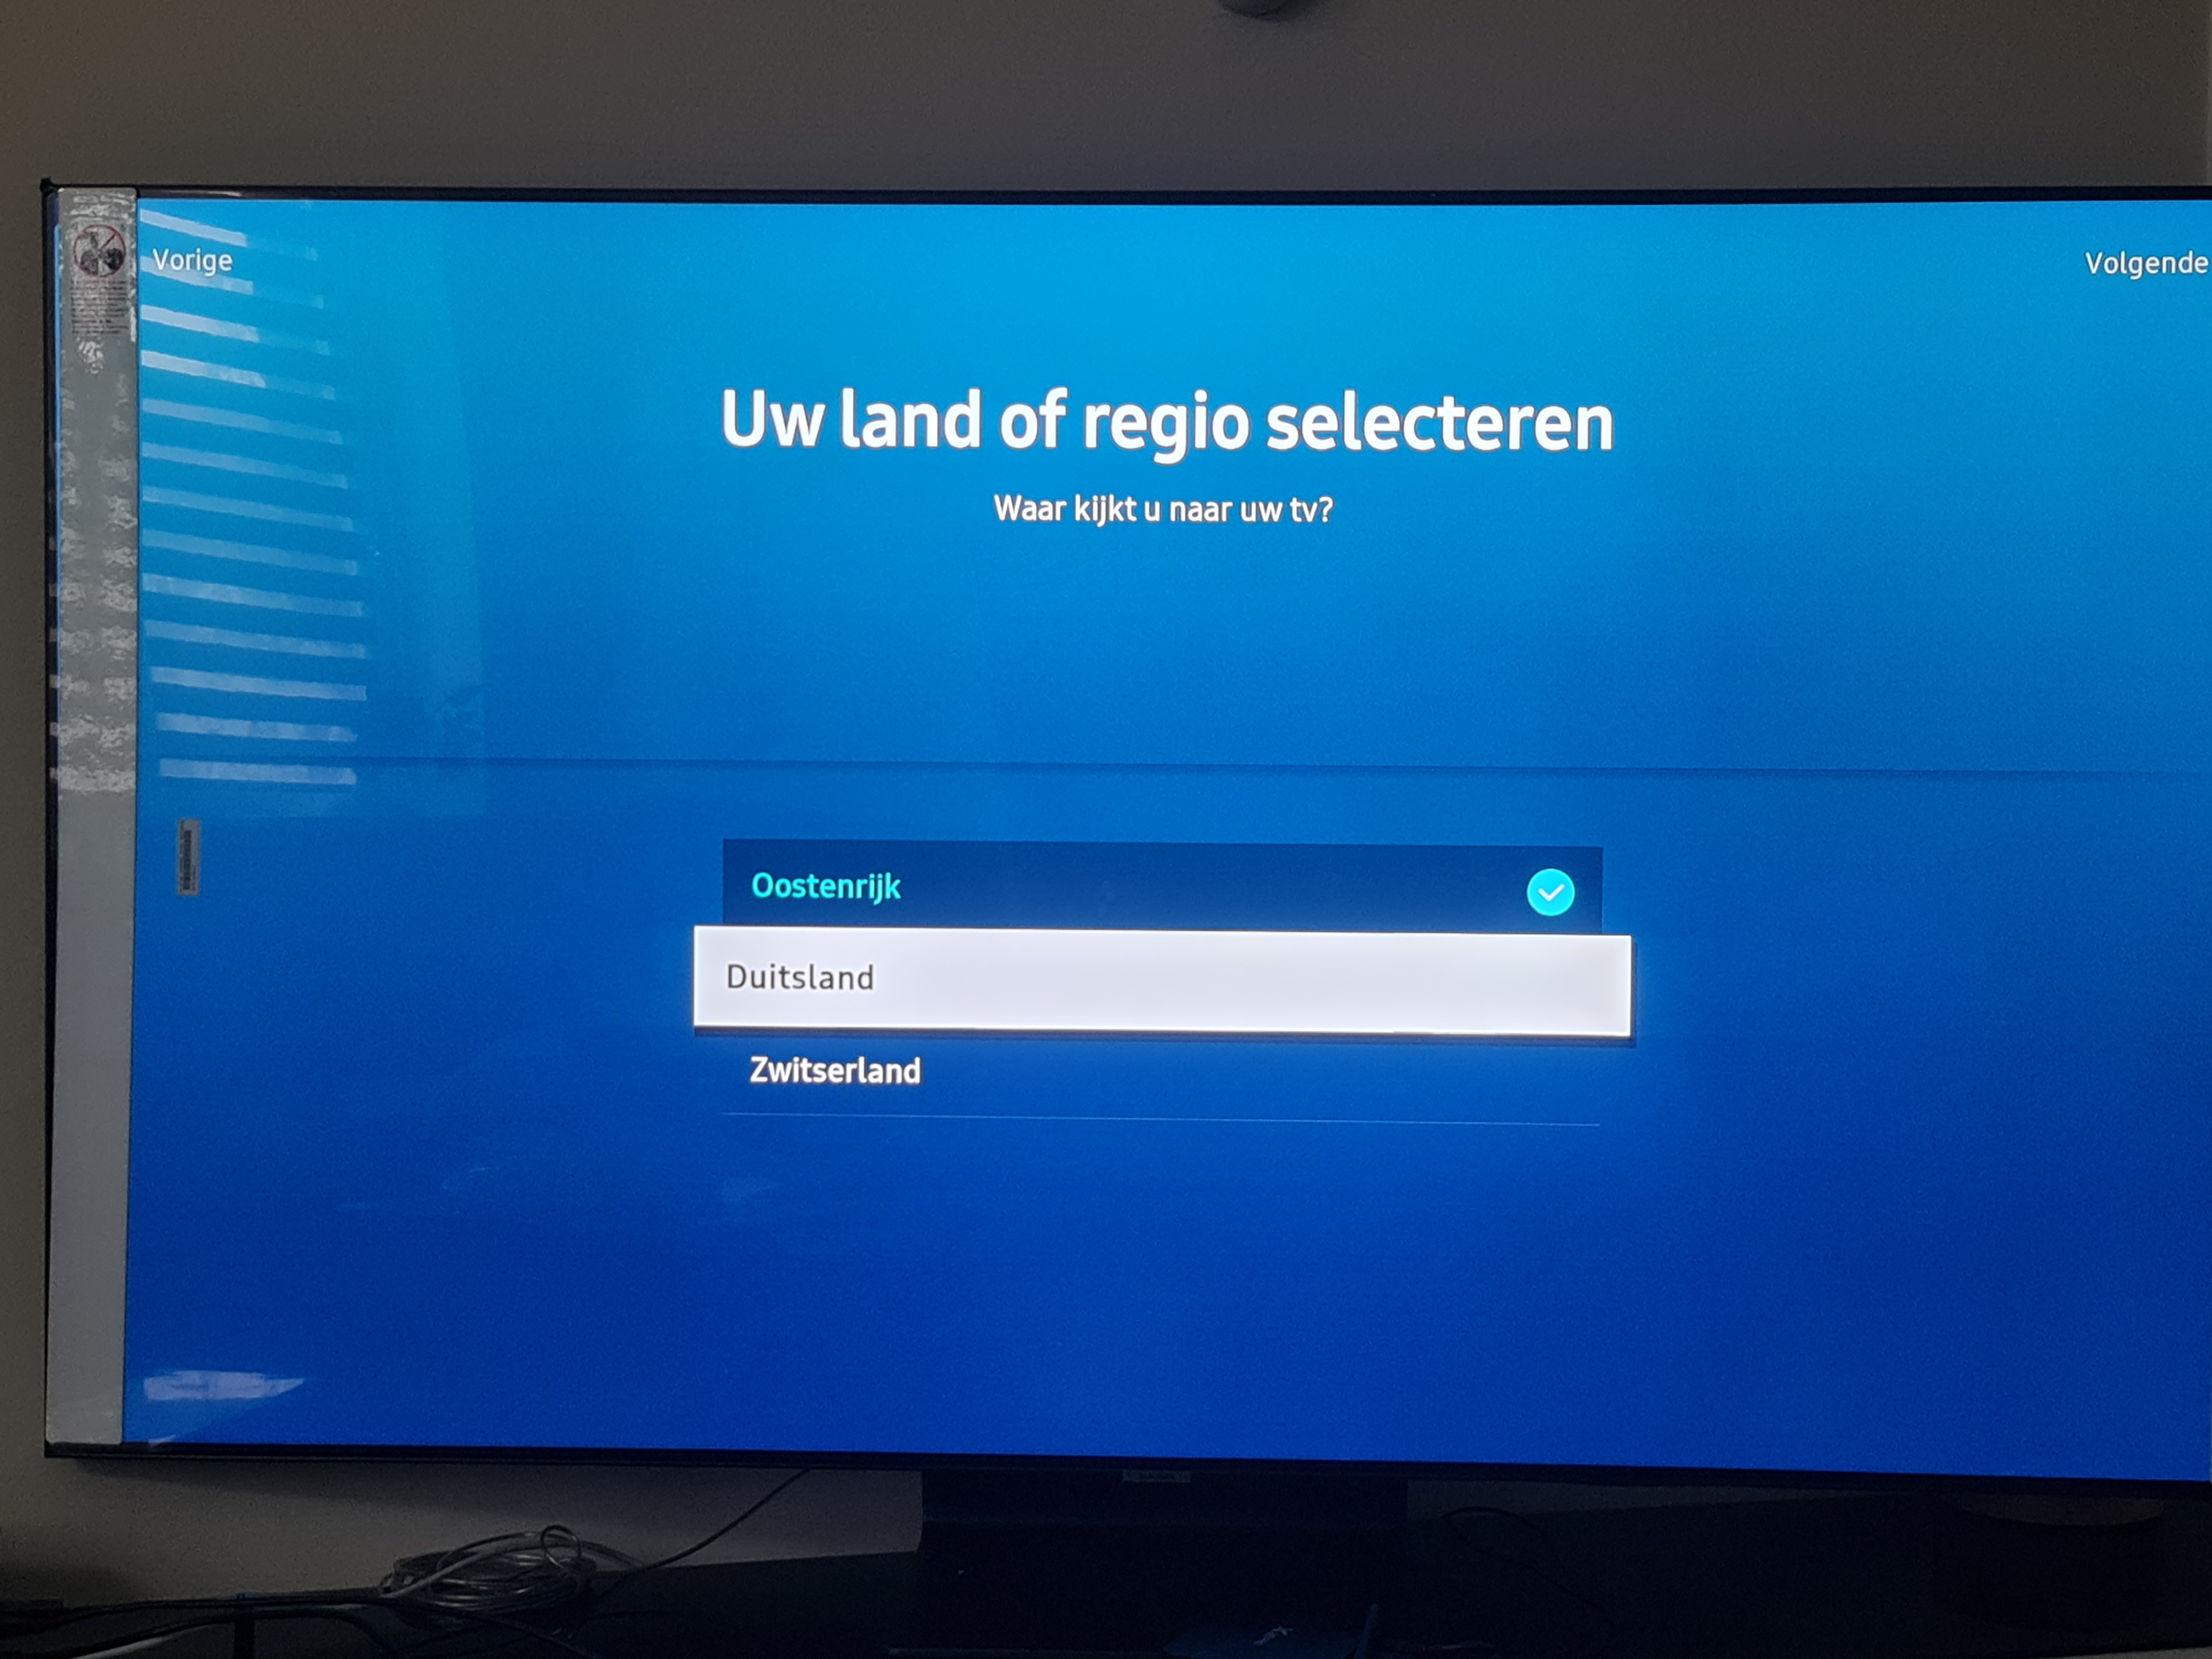 Land/Regio NL staat er niet bij QE65Q95TALXXN - Samsung Community